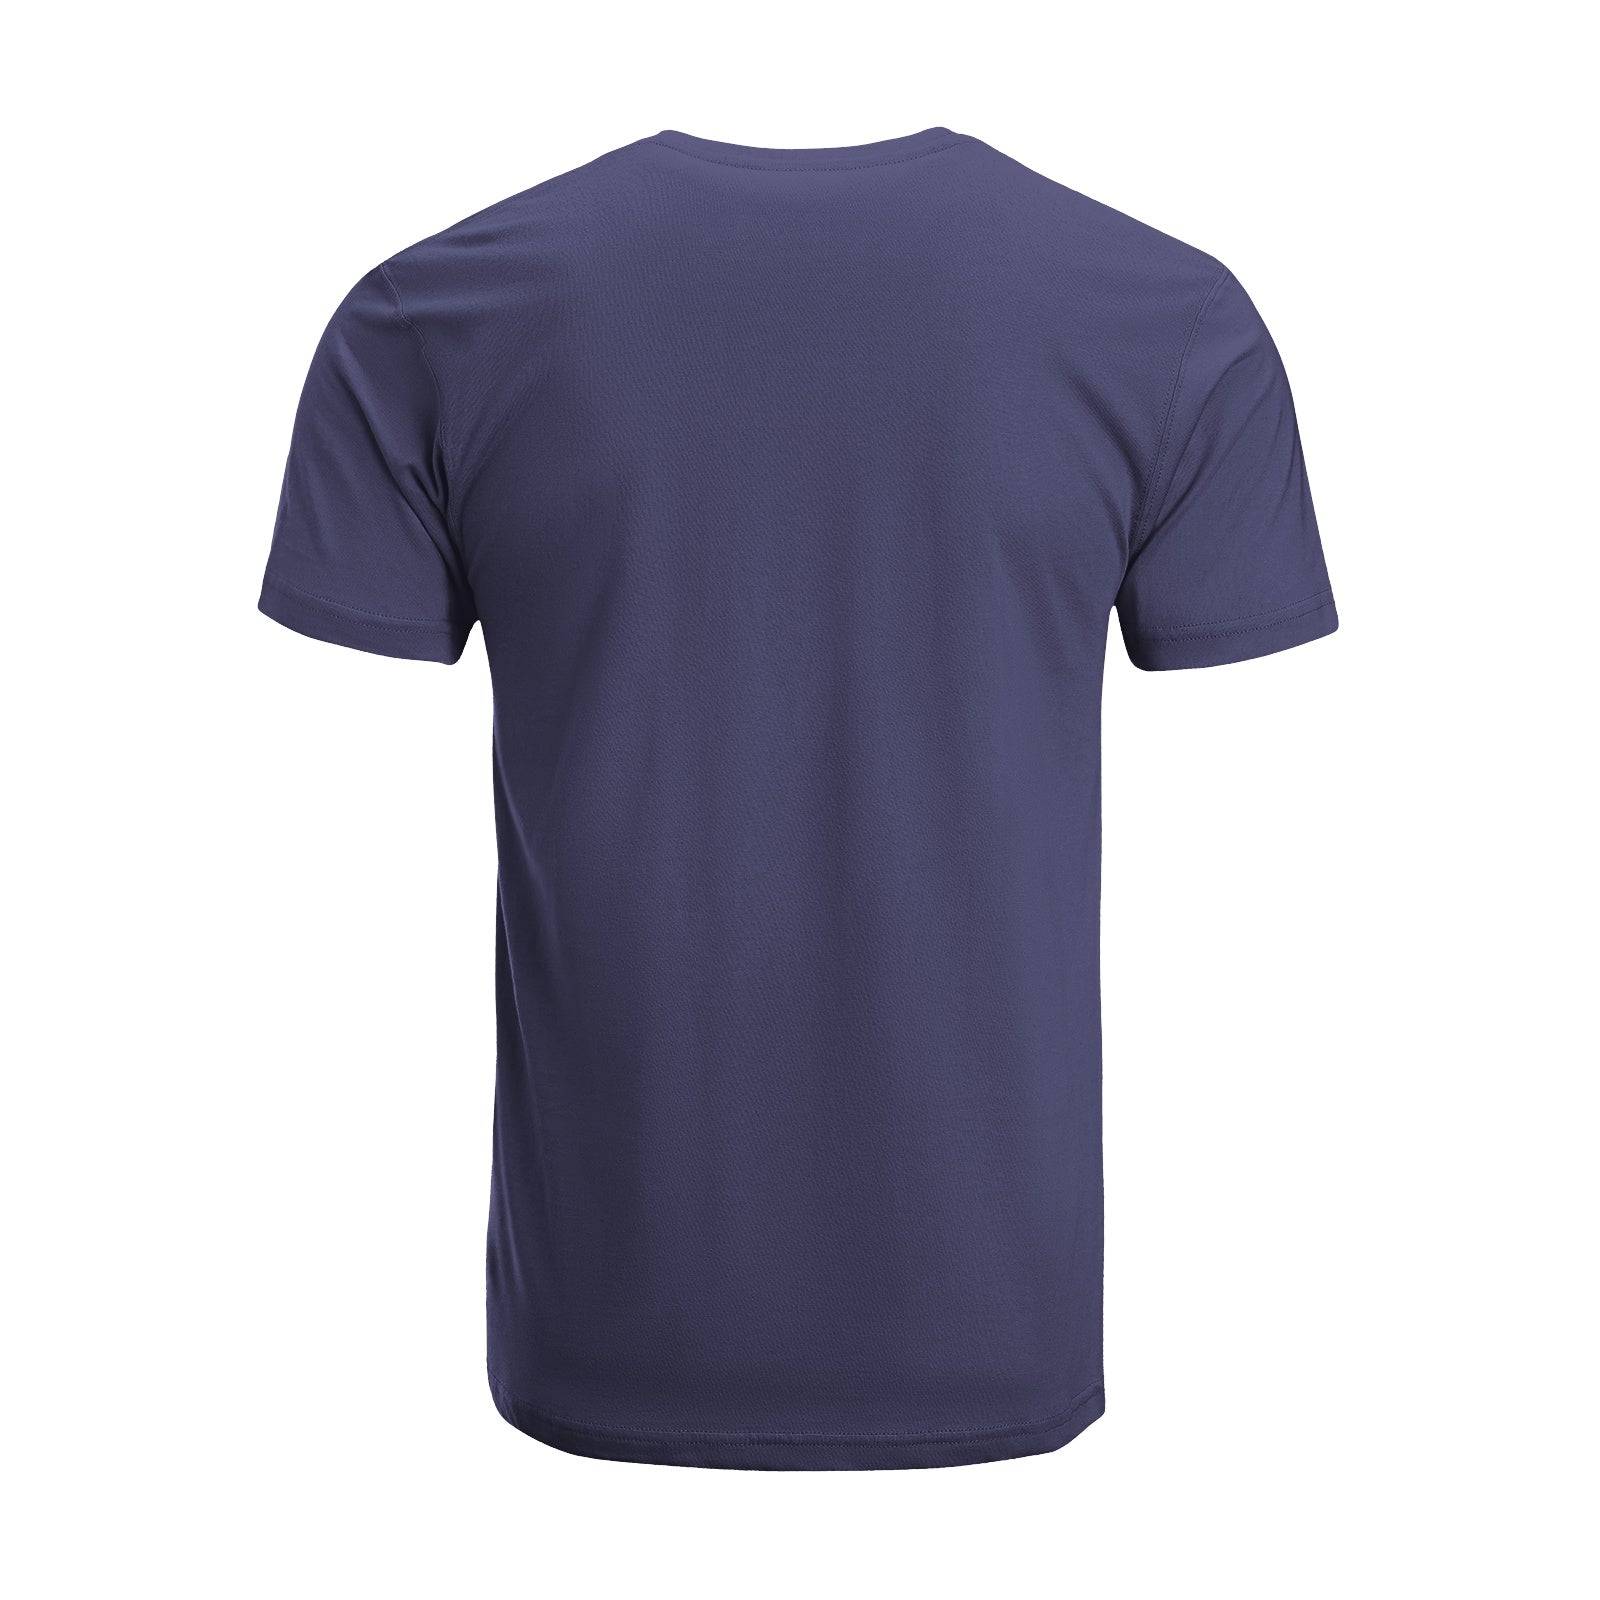 Unisex Short Sleeve Crew Neck Cotton Jersey T-Shirt Gym No. 05 - Tara-Outfits.com